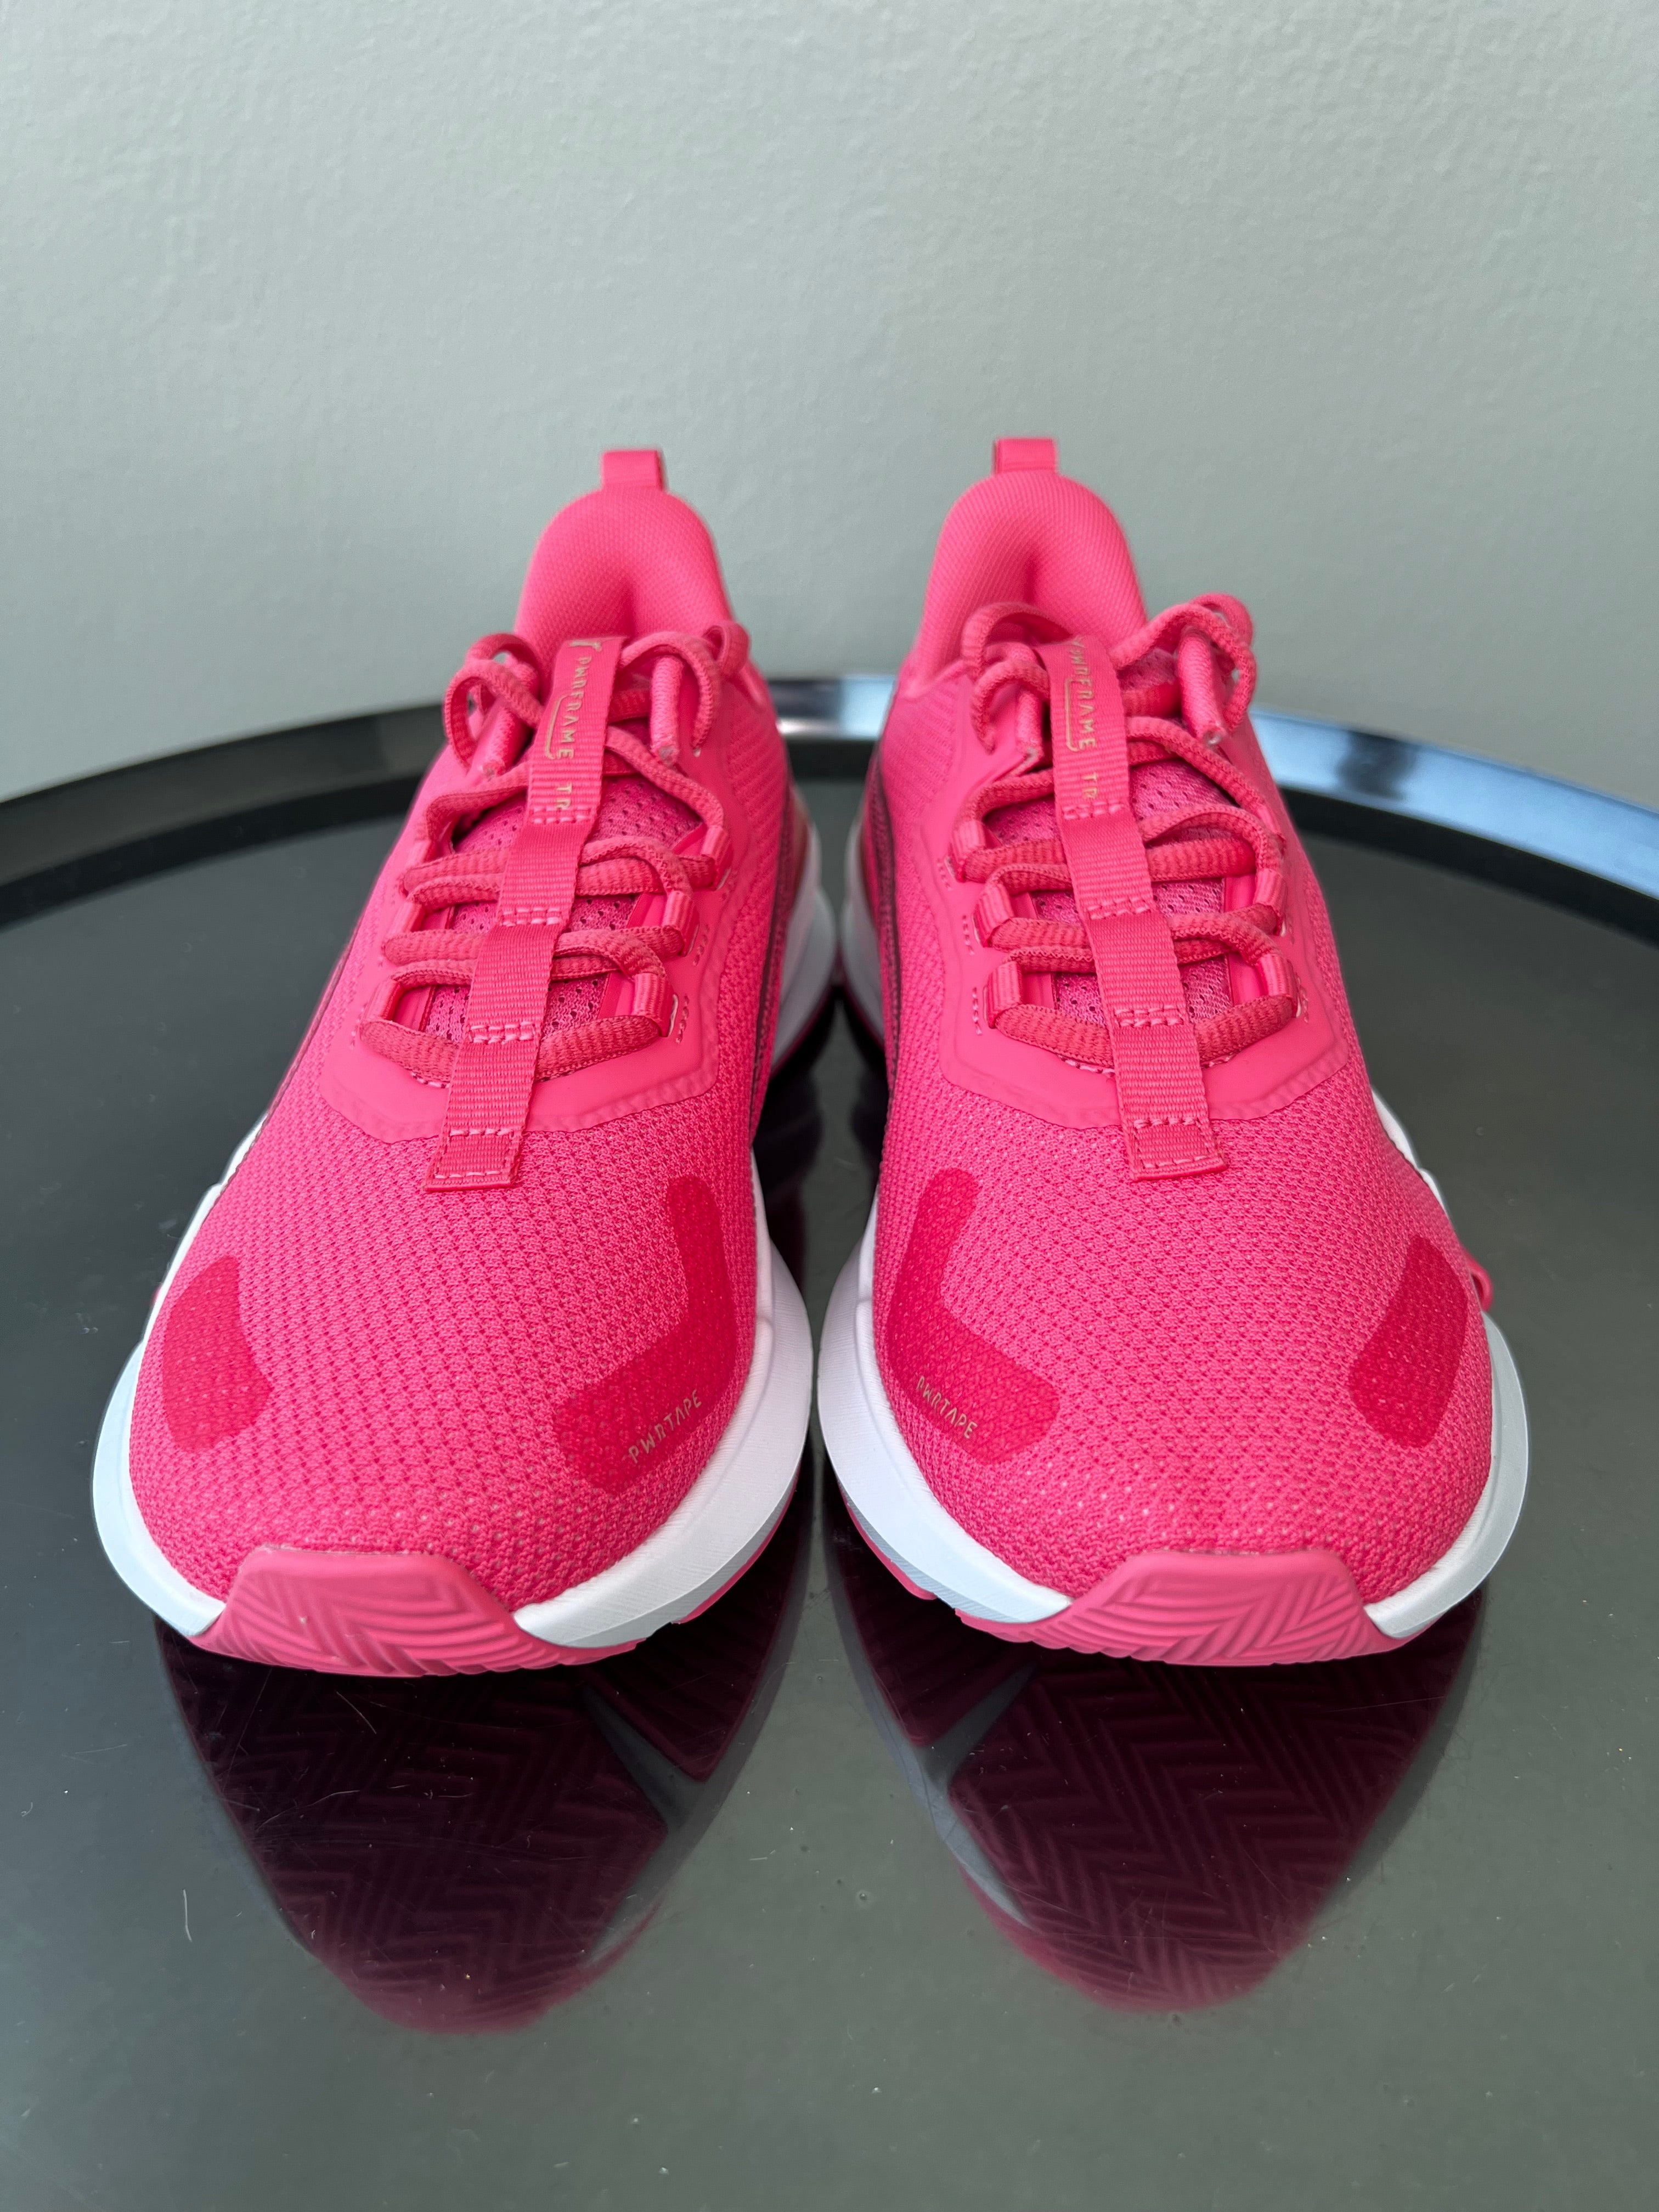 Puma, Shoes, Hot Pink High Top Puma Sneakers